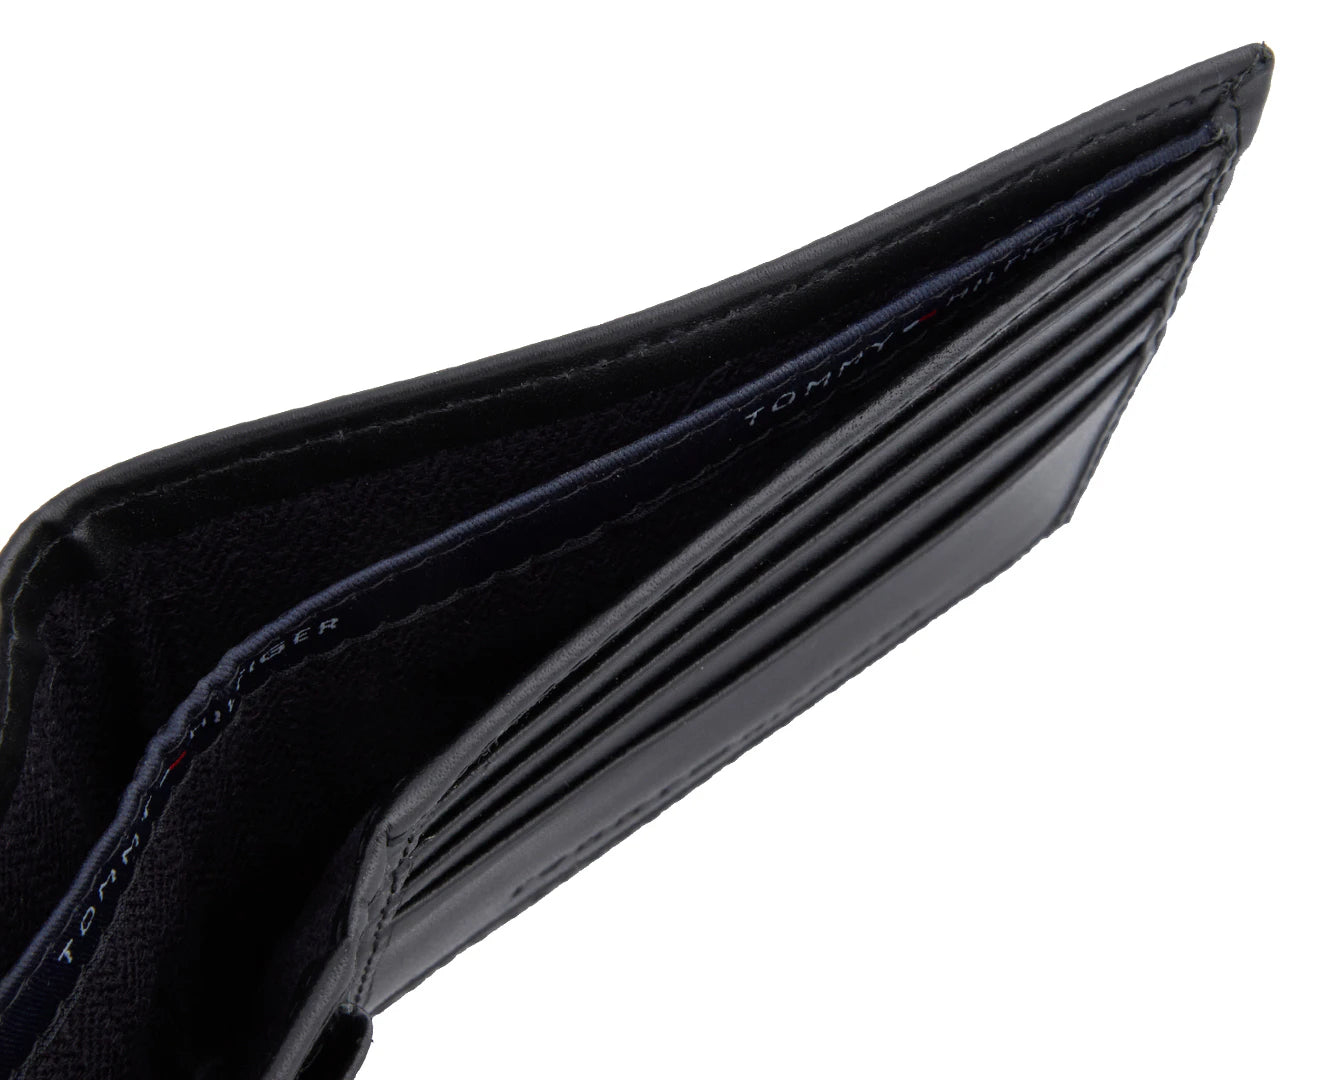 Tommy Hilfiger Men's Leather Wallet Cambridge Passcase Billfold Wallet, Black (Close Up)